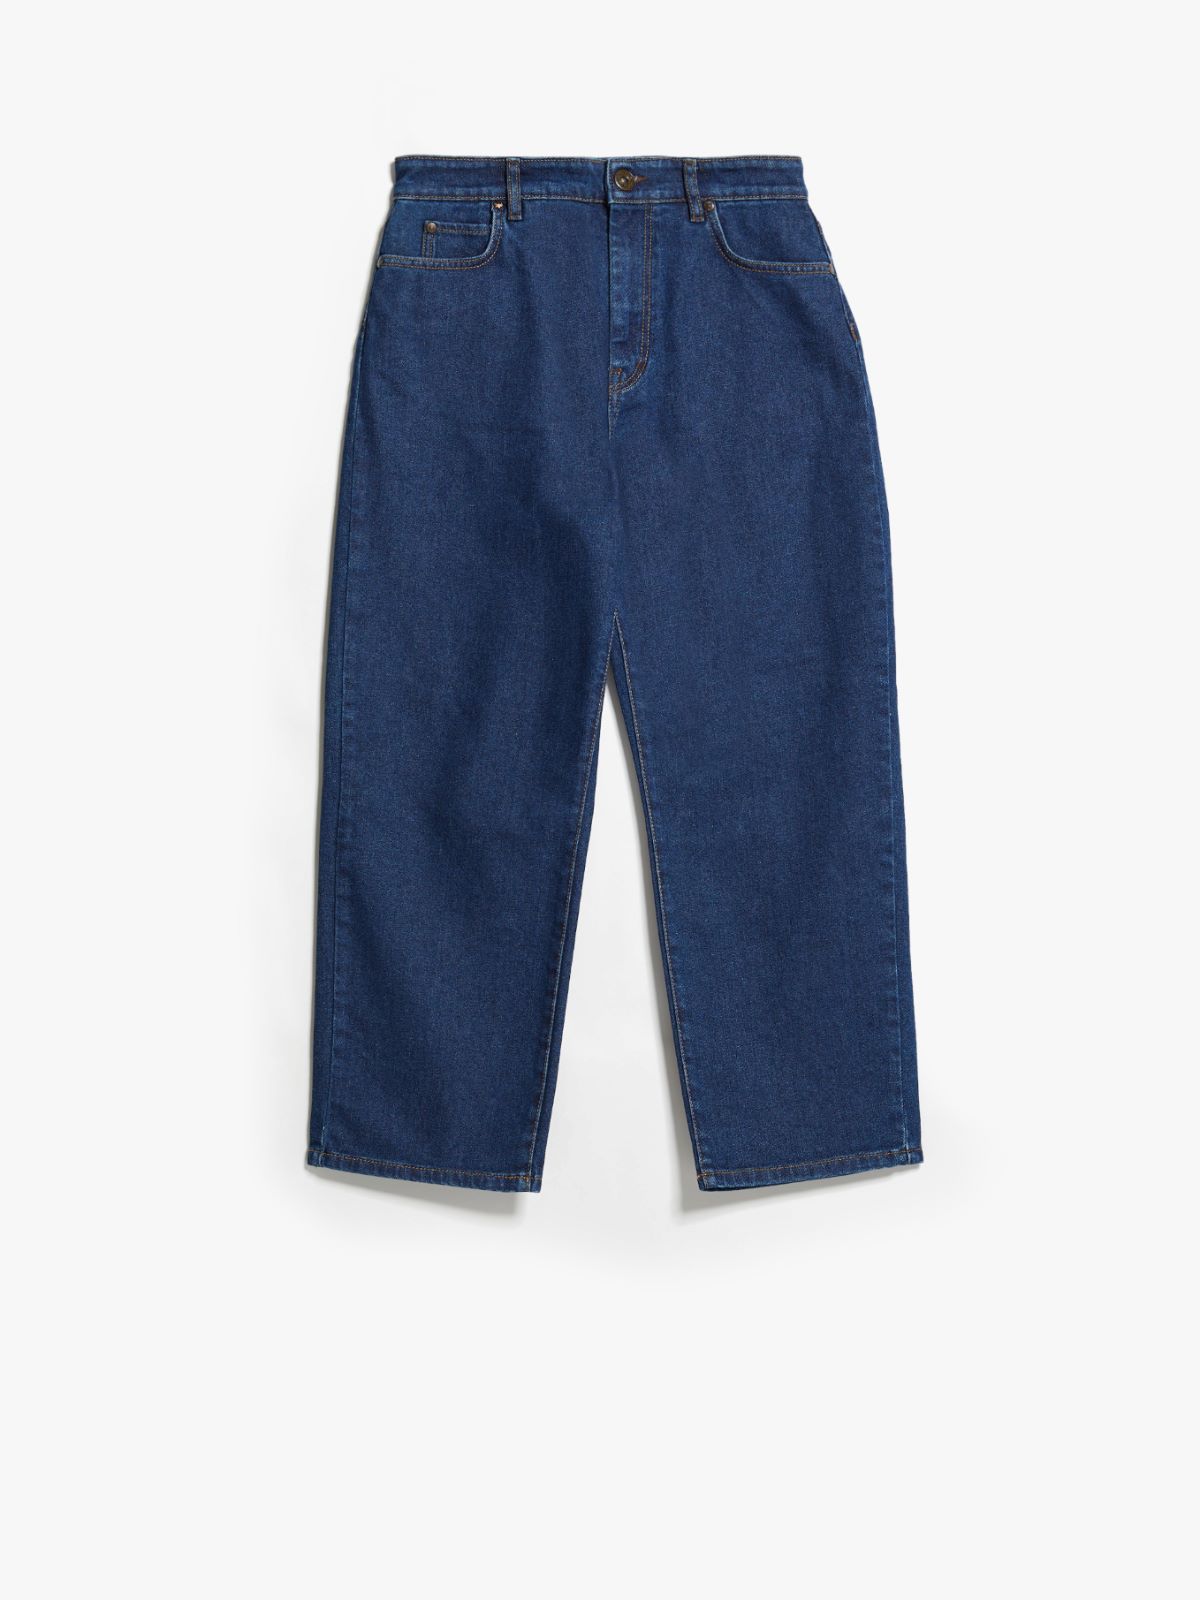 5-pocket jeans - NAVY - Weekend Max Mara - 5